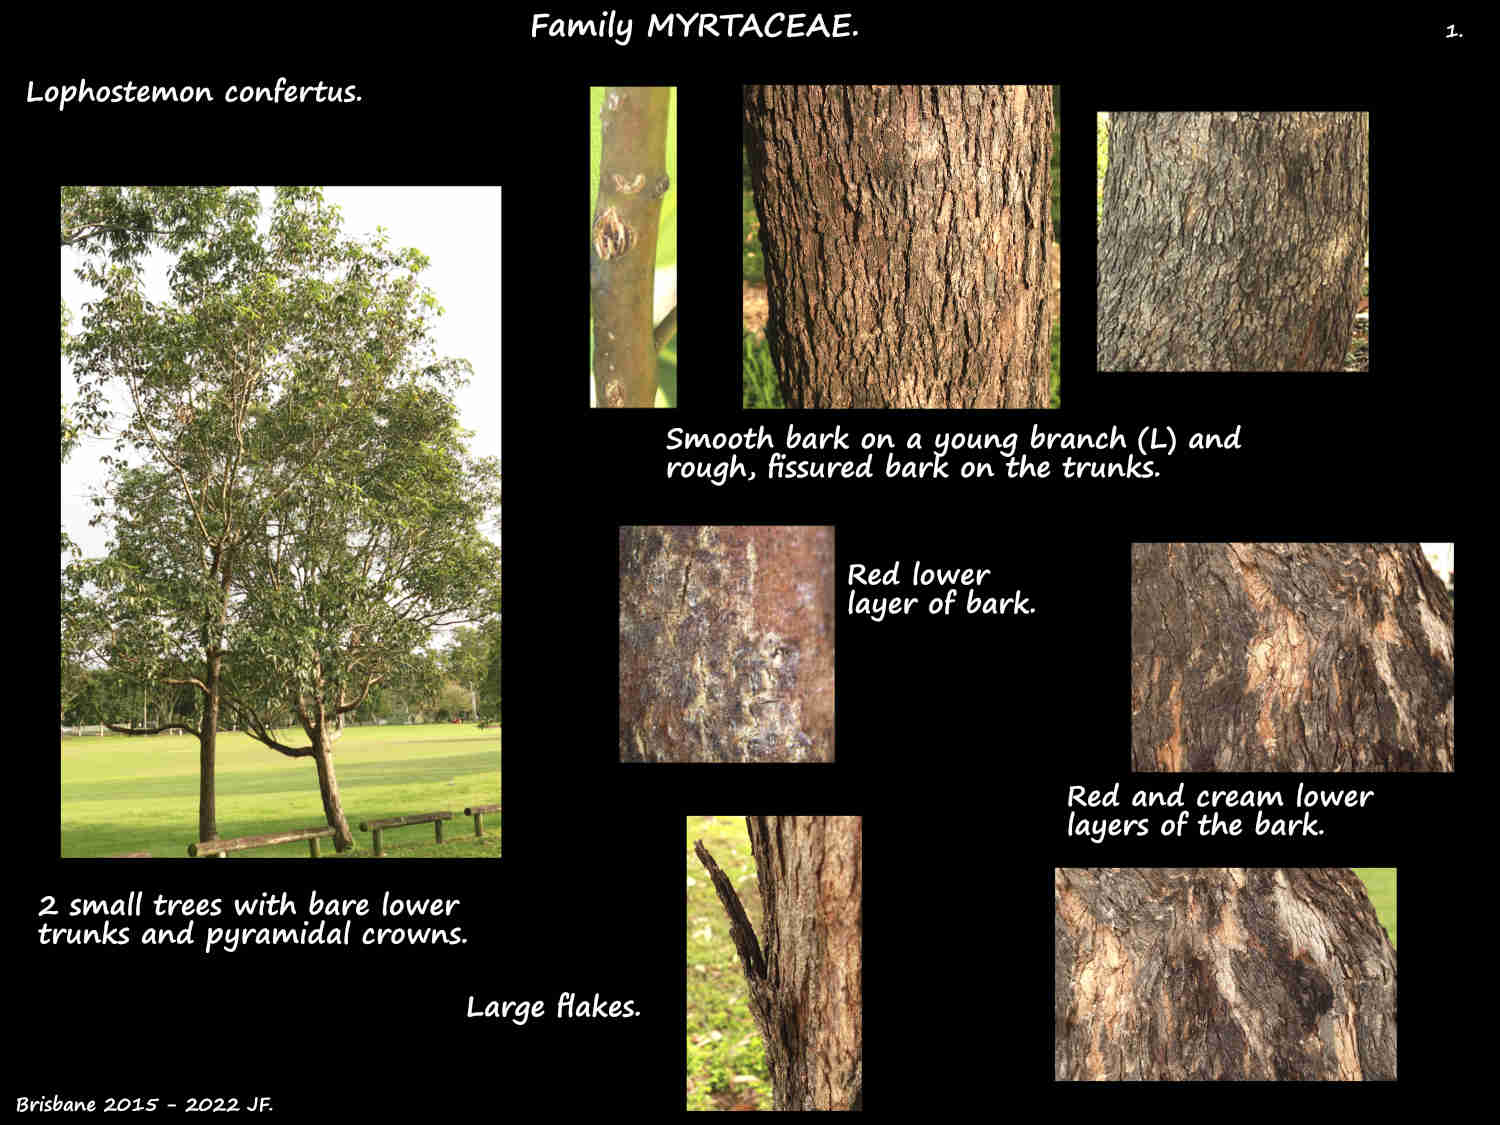 1 Small Lophostemon confertus trees & bark